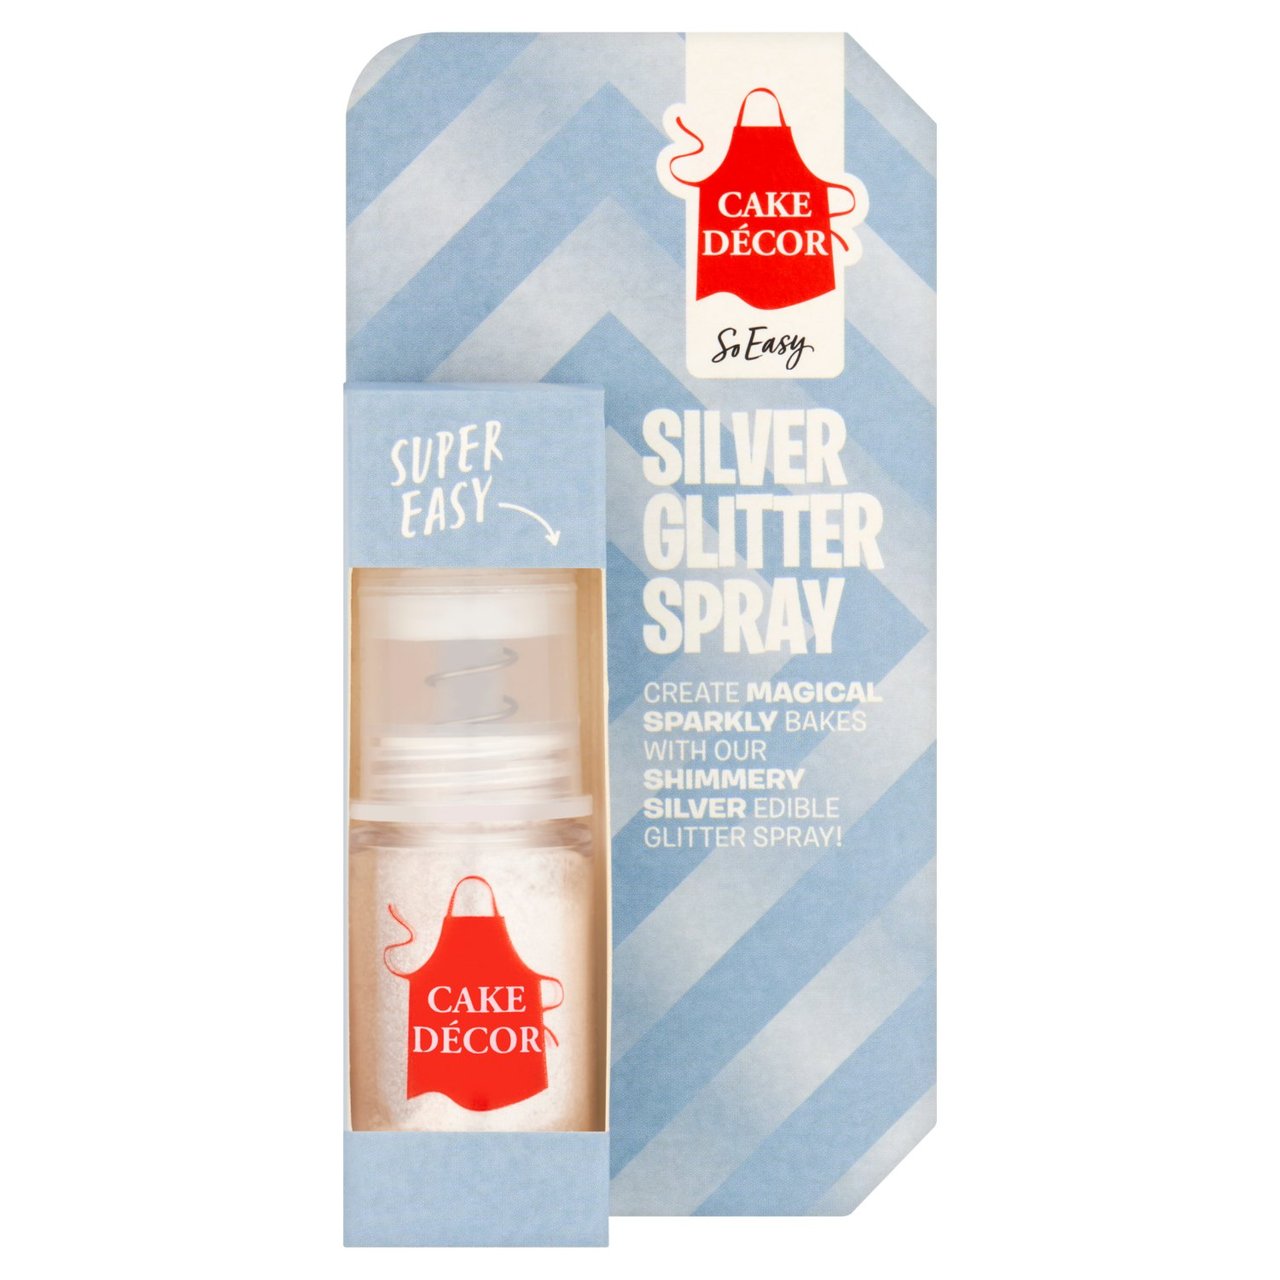 Cake Decor Silver Glitter Spray 4g